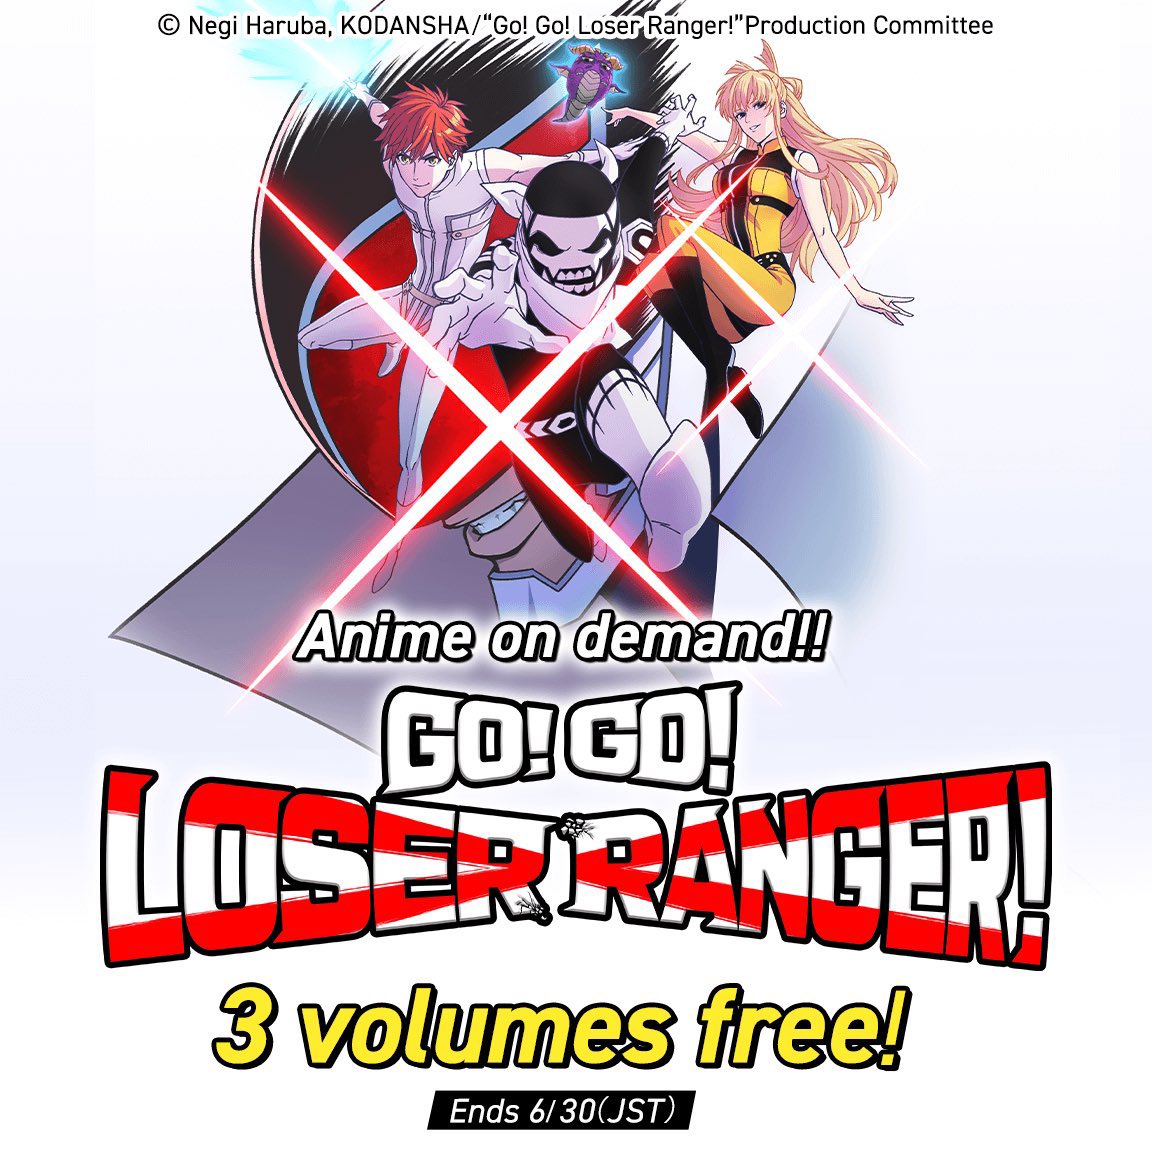 What do you think of the Go! Go! Loser Ranger! anime so far? Read the manga on @KMANGA_KODANSHA (USA) ✨More: s.kmanga.kodansha.com/ldg?t=10462